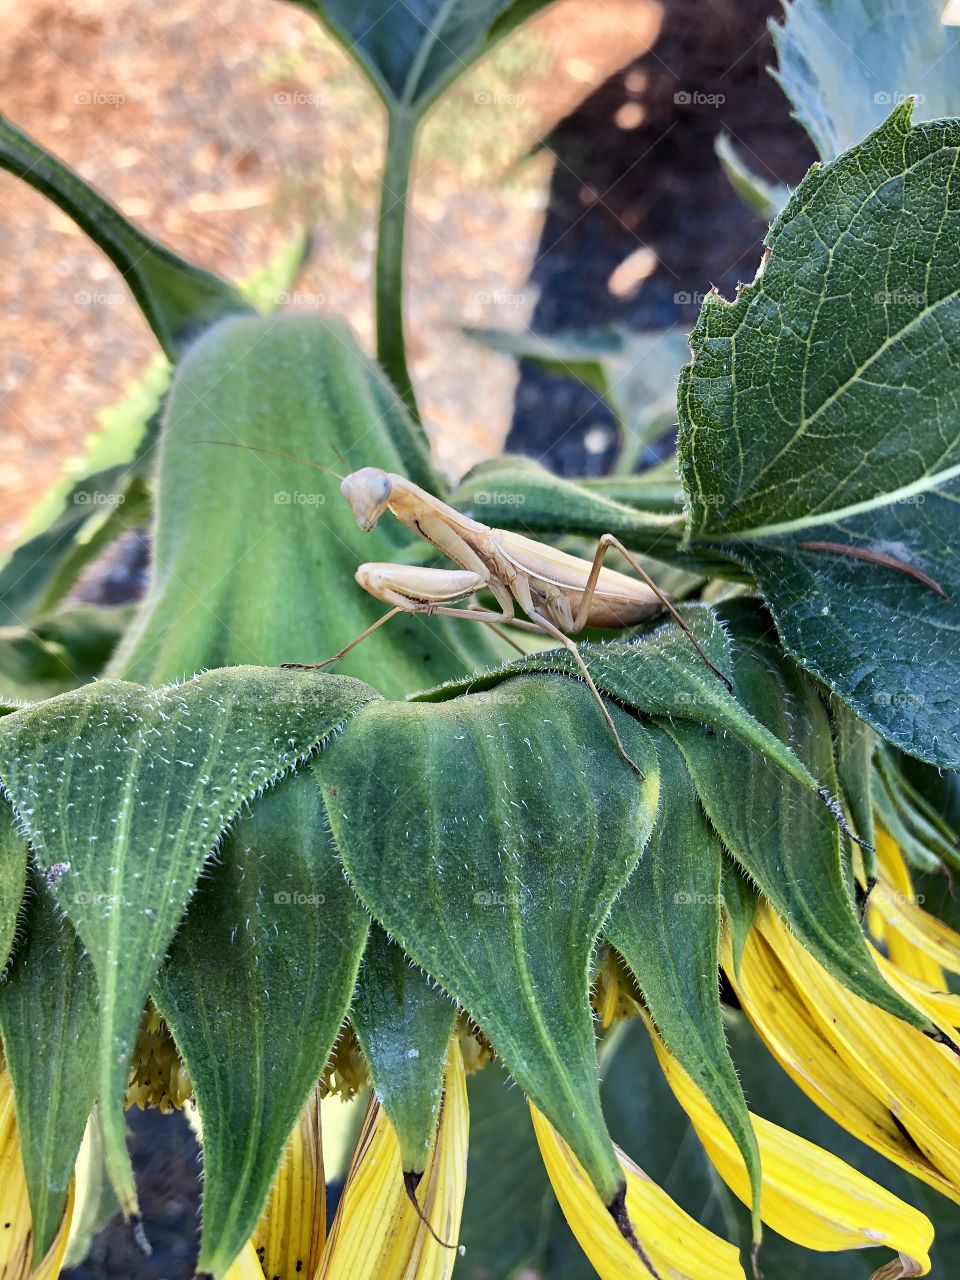 Praying mantis on a sunflower 